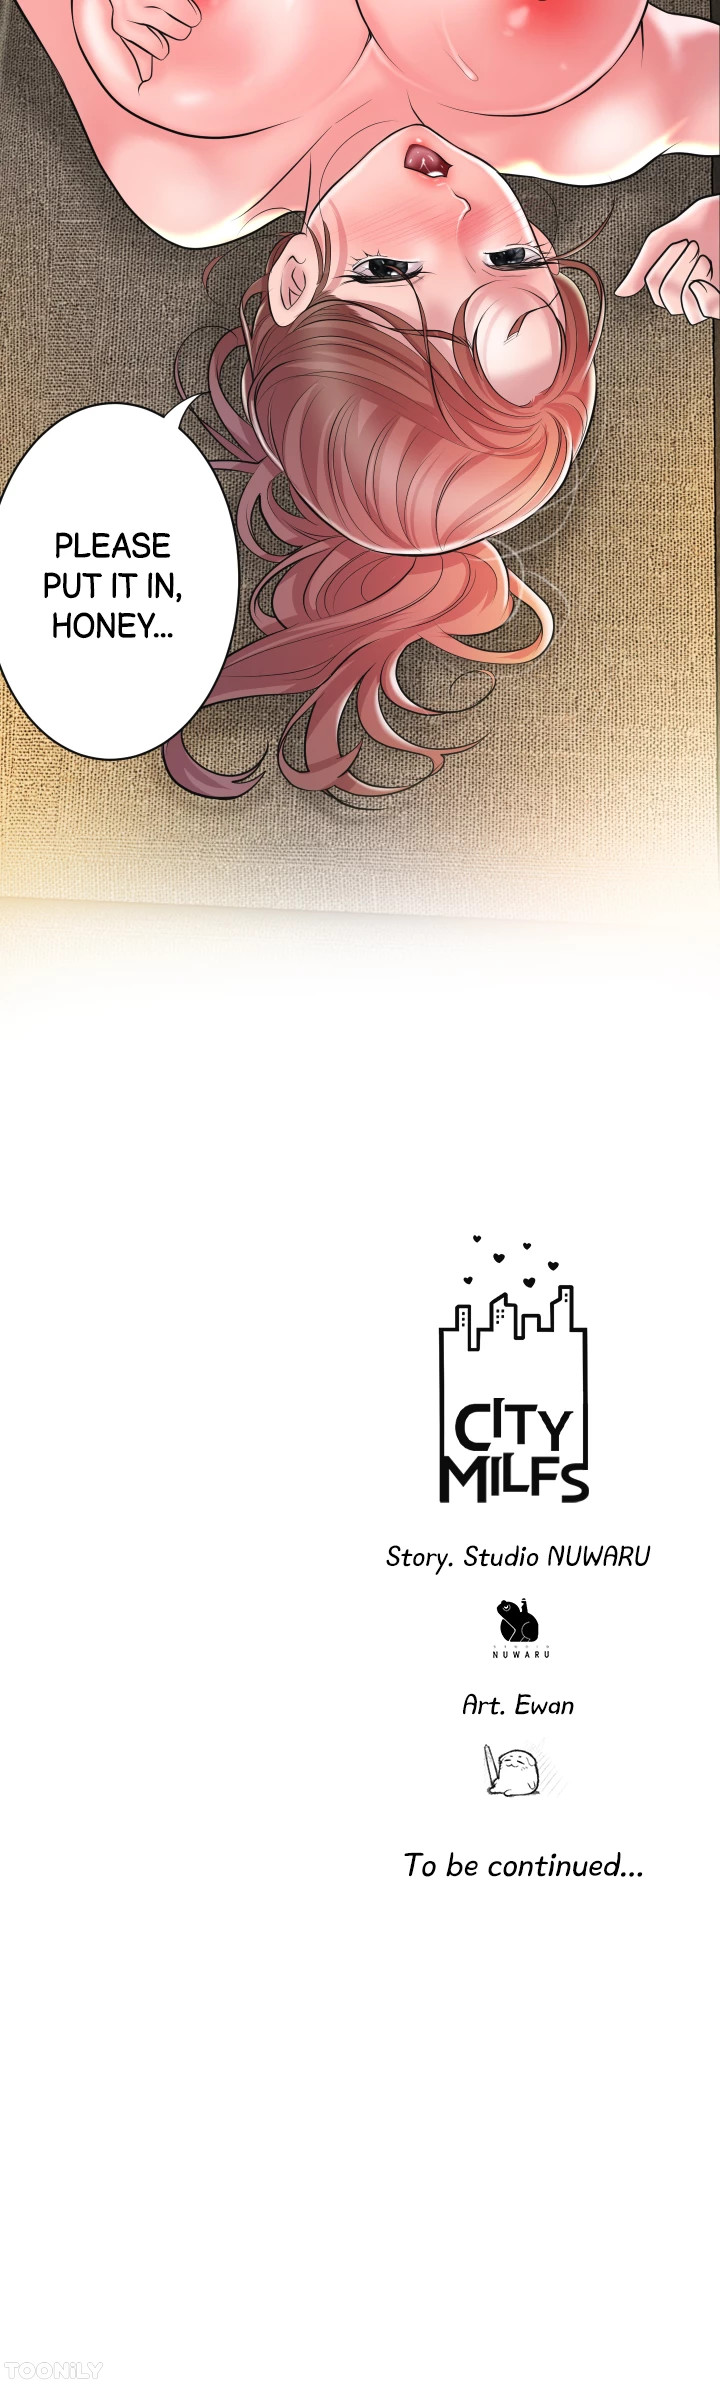 CITY MILFS image